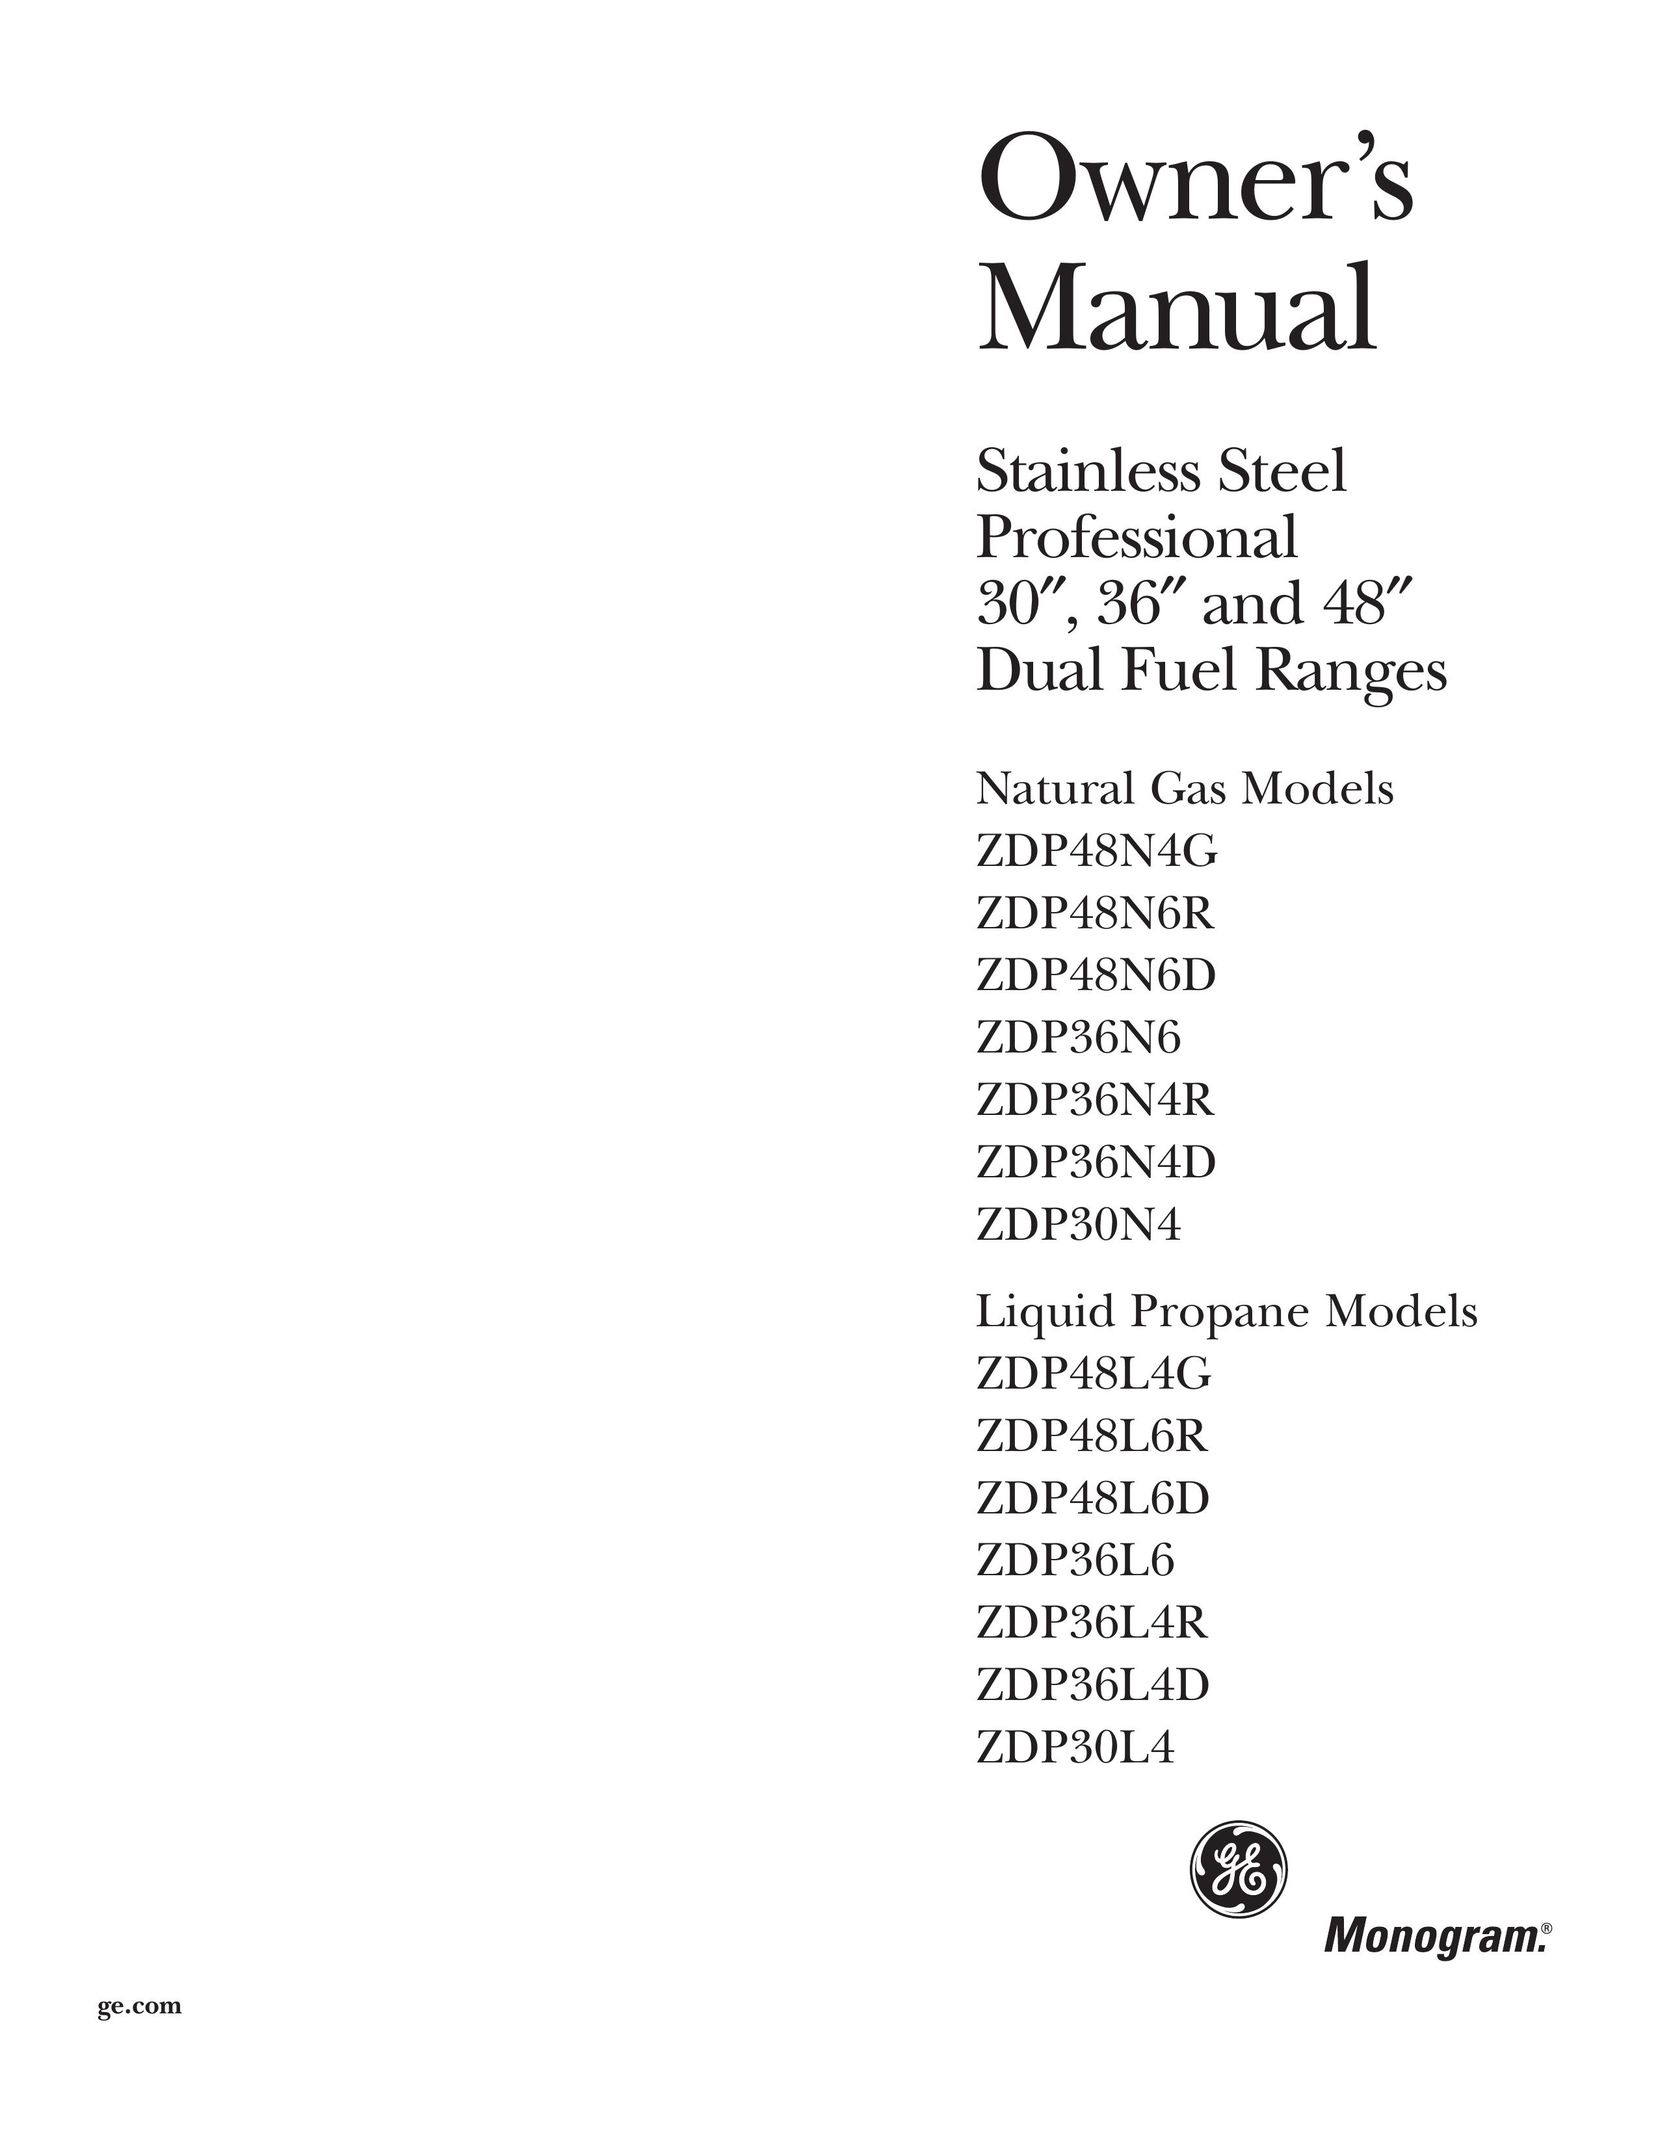 GE Monogram 36 and 48 Dual Fuel Ranges Natural Gas Models ZDP48N4G Range User Manual